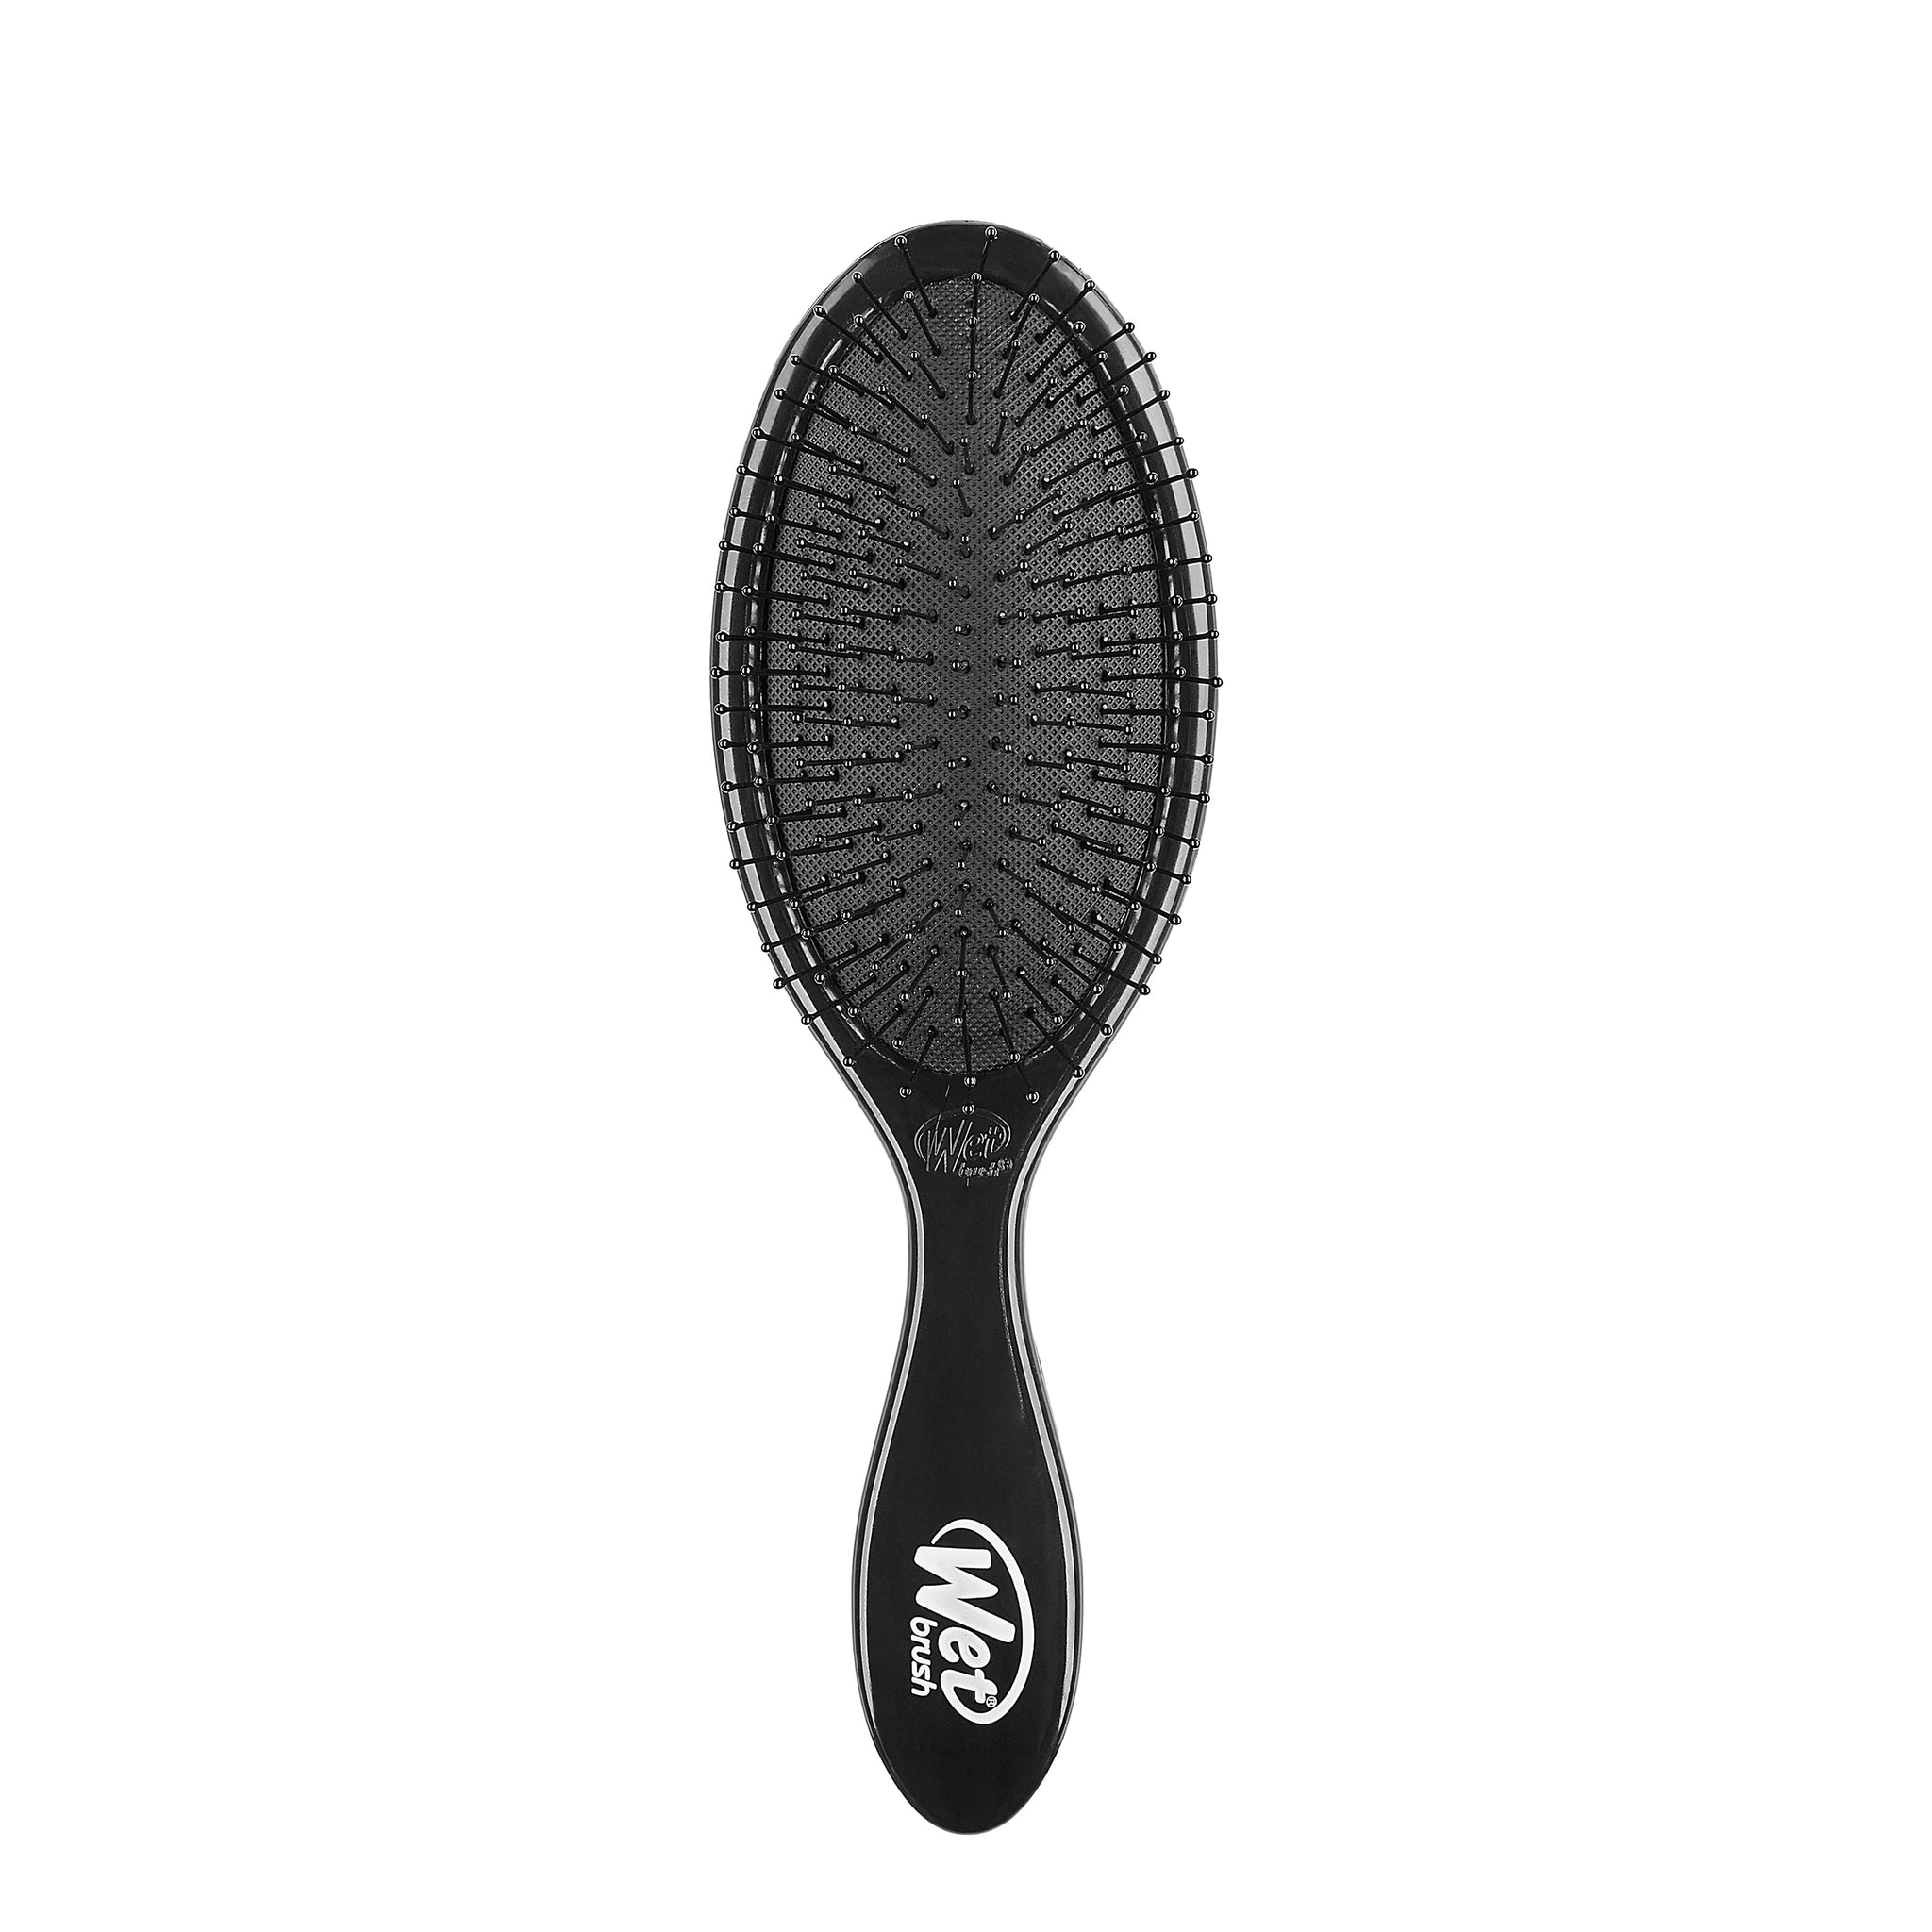 Wet Brush® The Original Detangler® Hair Brush Color Wash Watermark